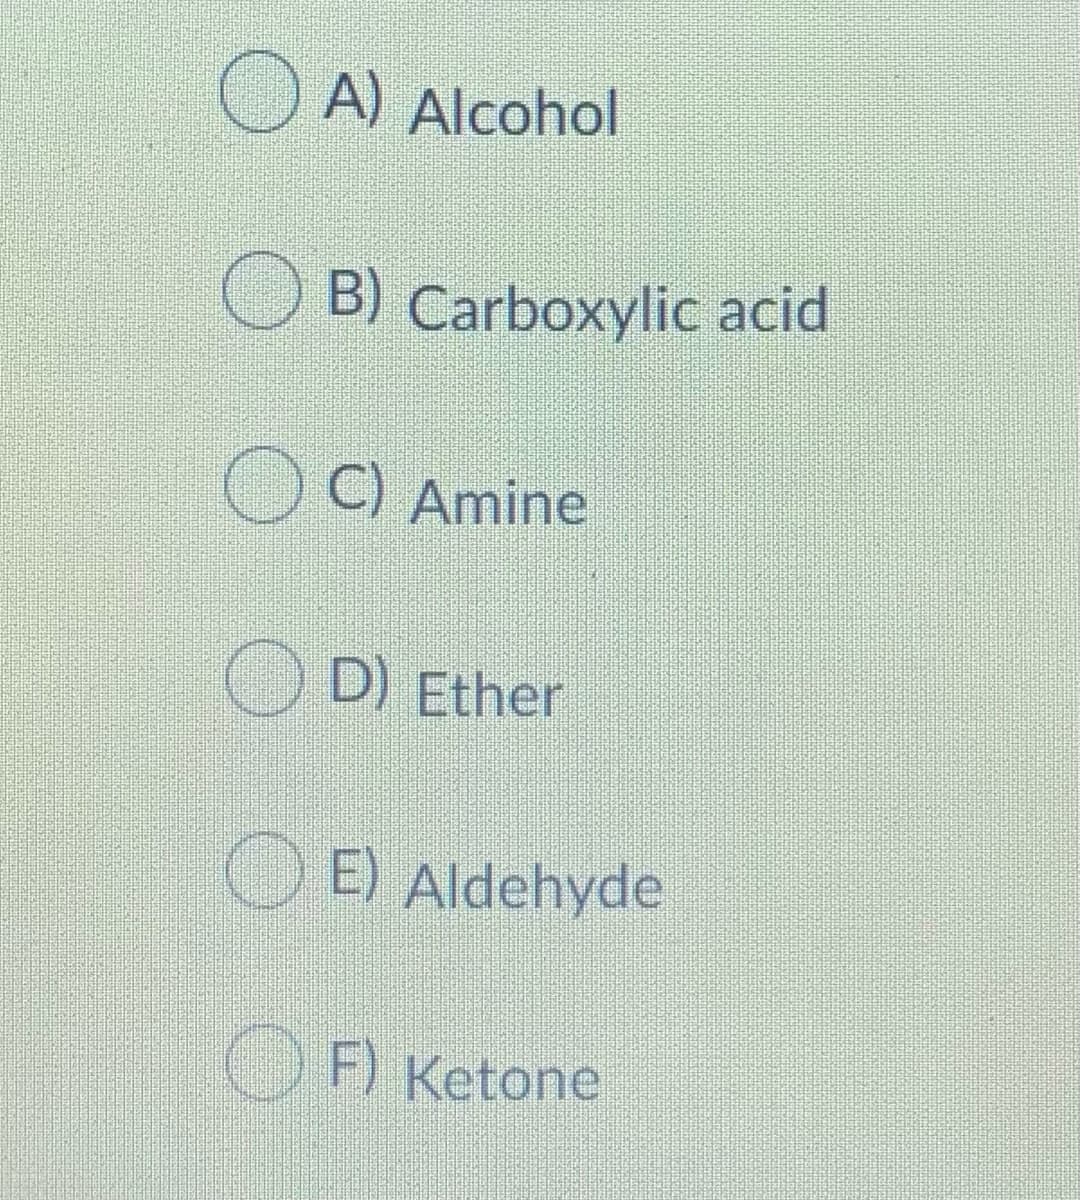 O A) Alcohol
B) Carboxylic acid
C) Amine
D) Ether
O E) Aldehyde
O F) Ketone
